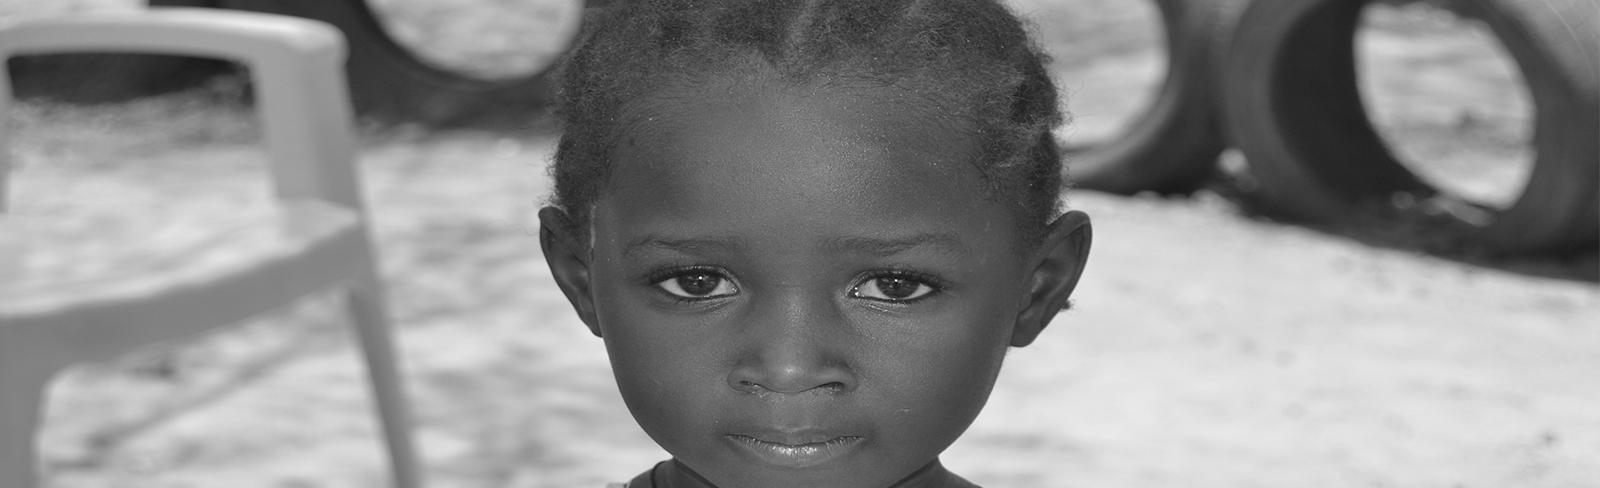 little girl, Burkina Faso